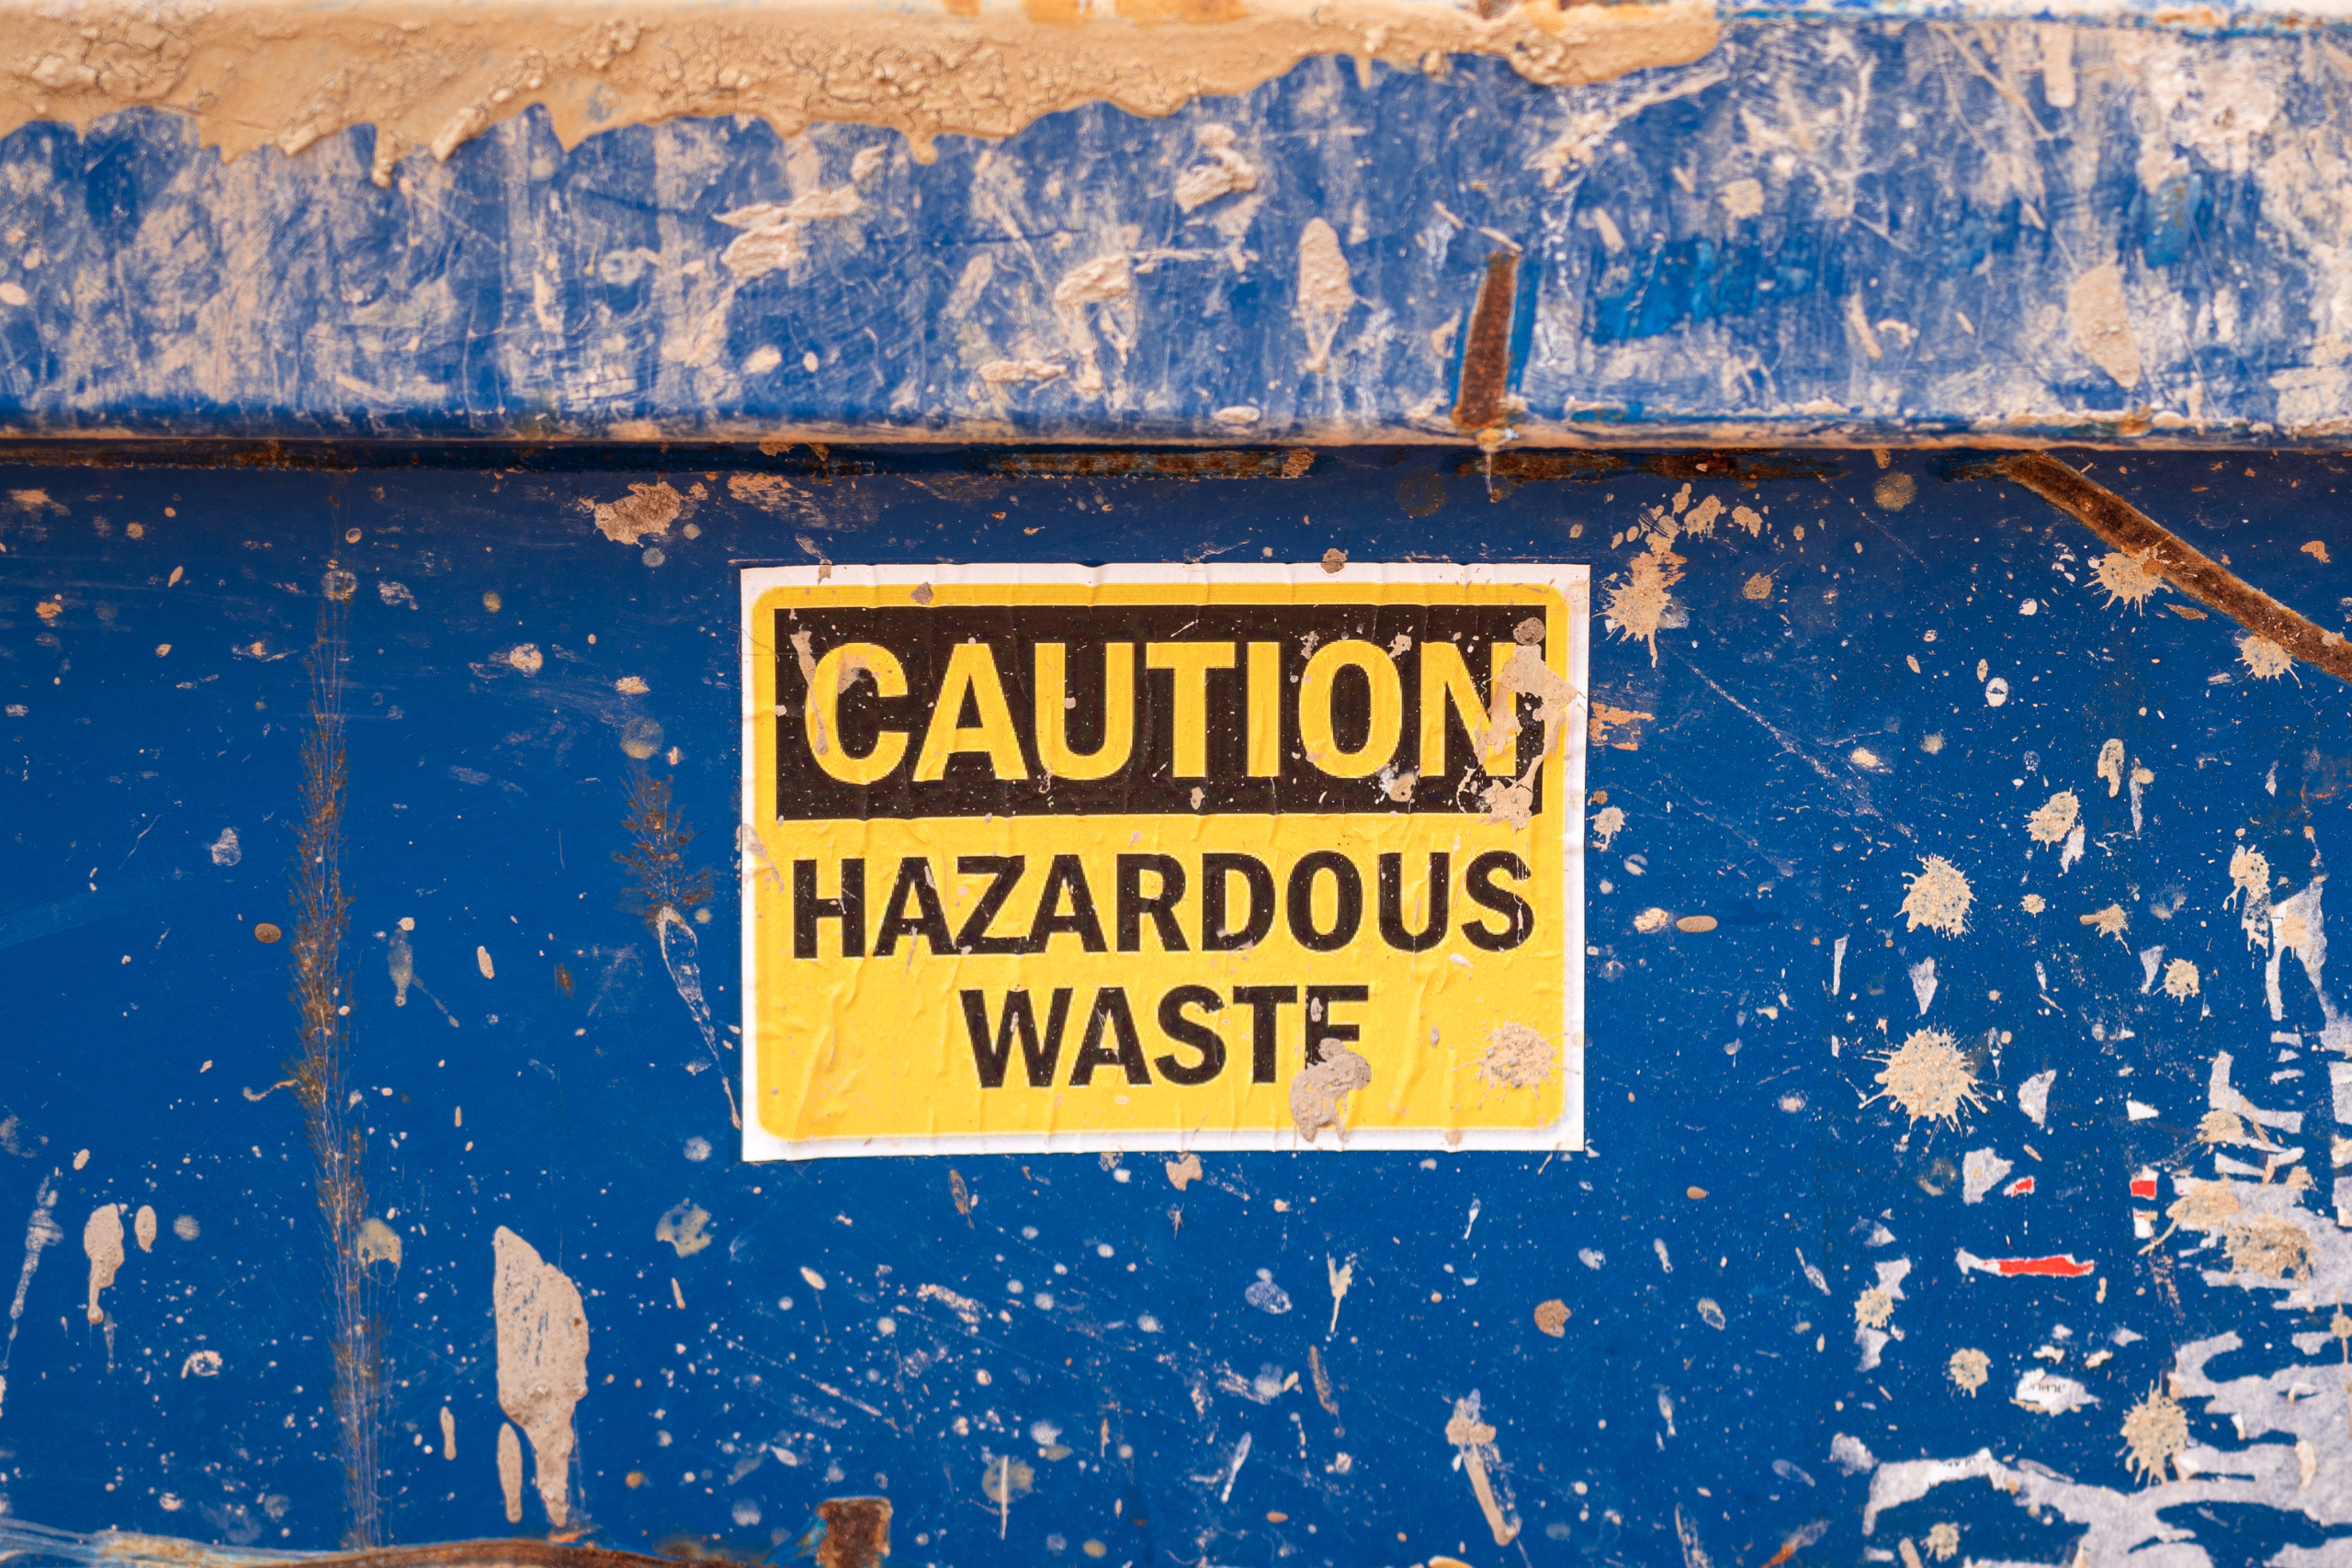 Caution: Hazardous Waste